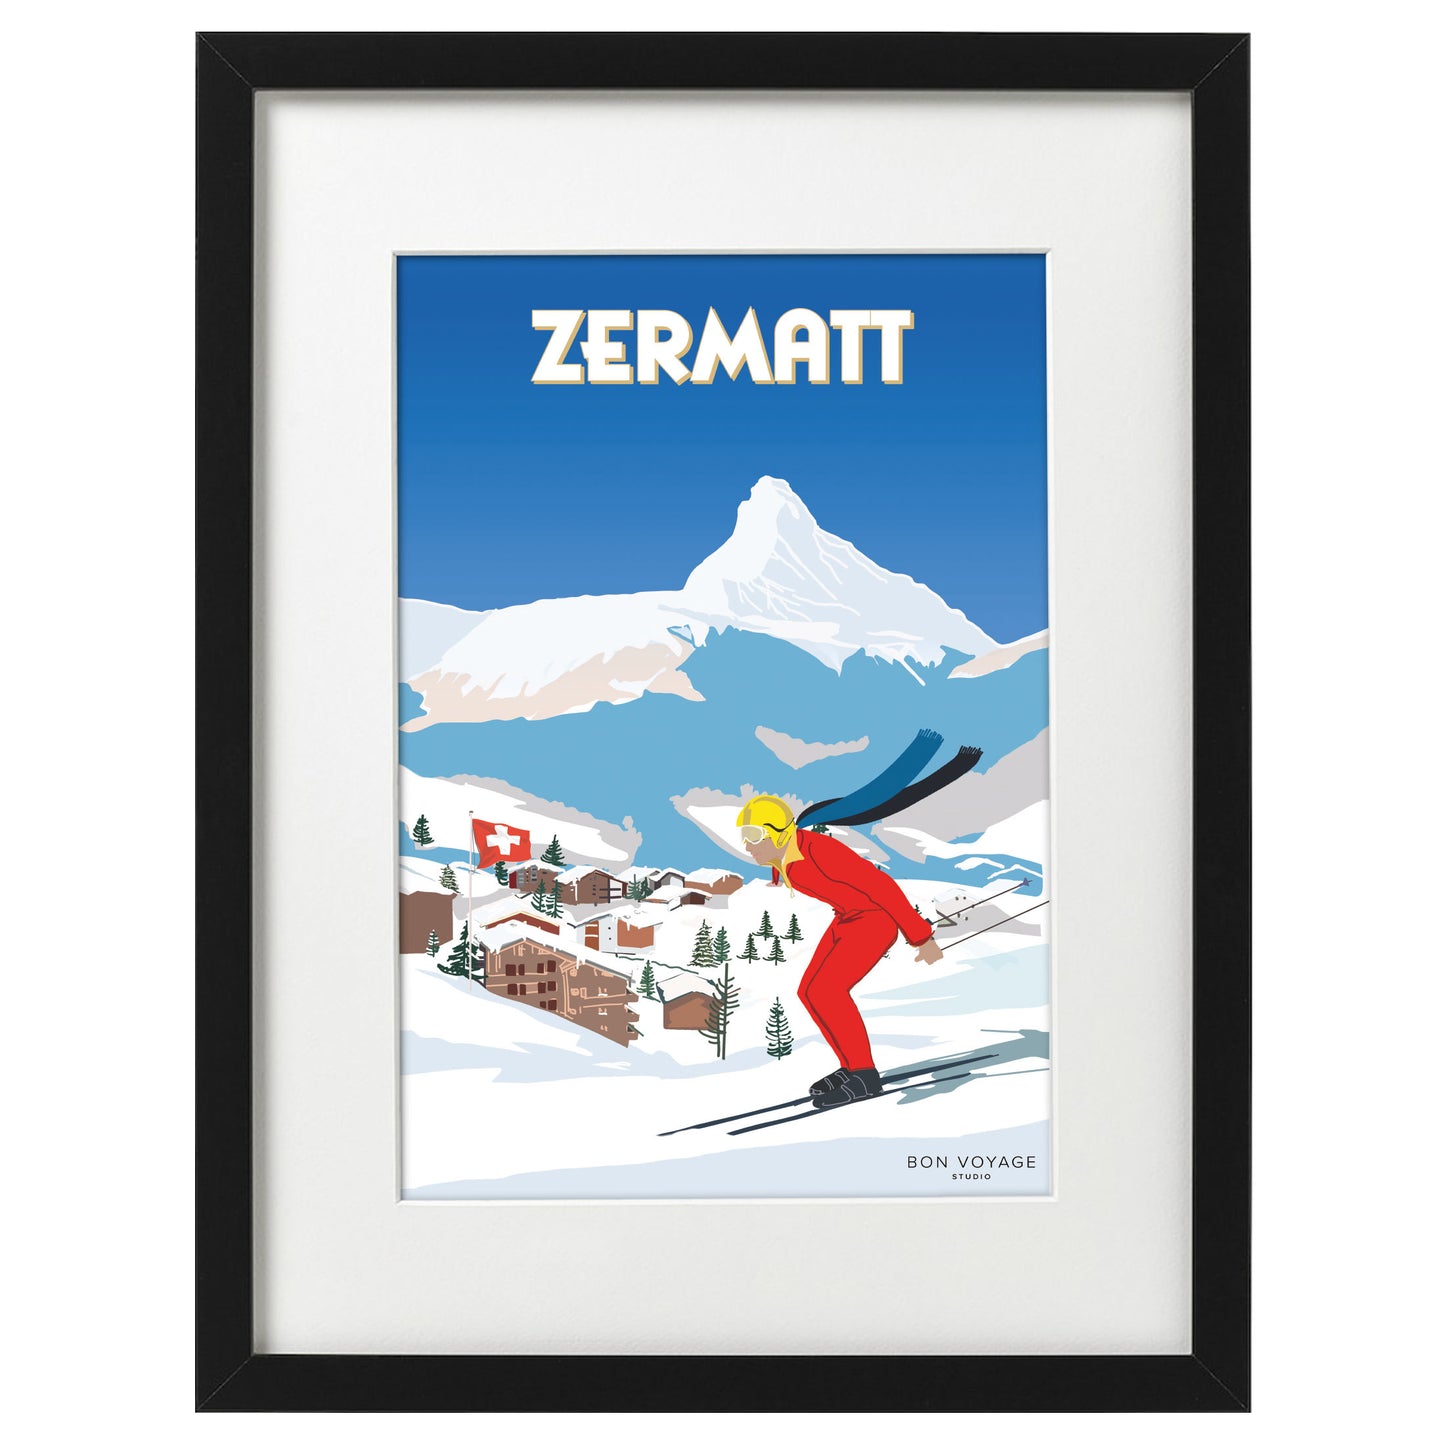 Gerahmter Print "ZERMATT"